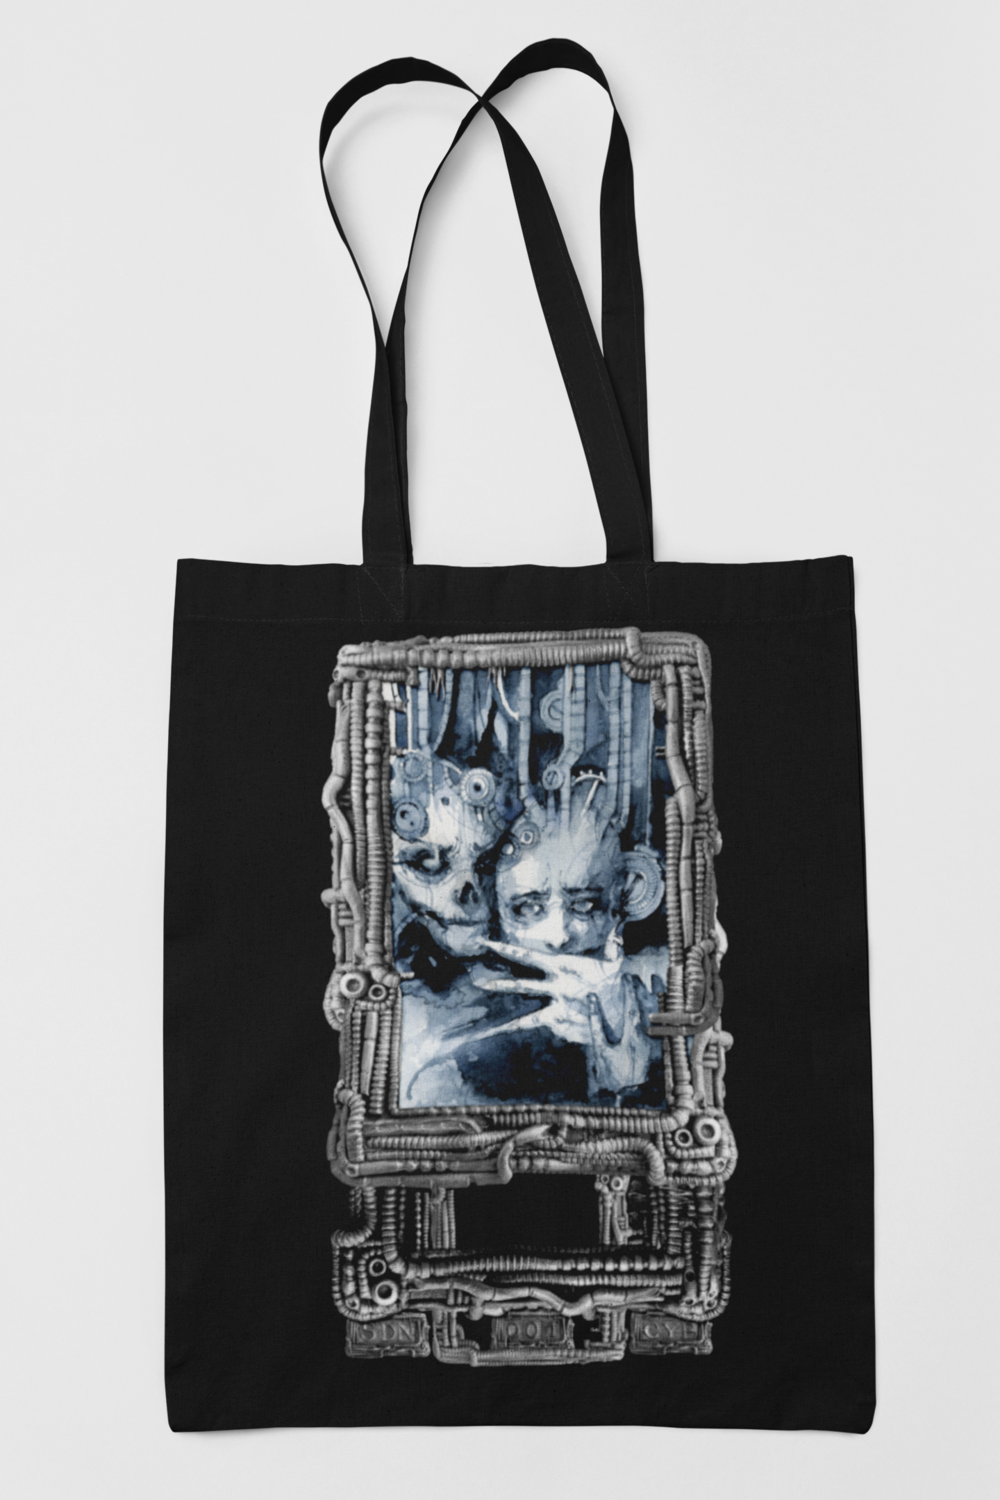 Tote bag - Muter (Coverdesign)